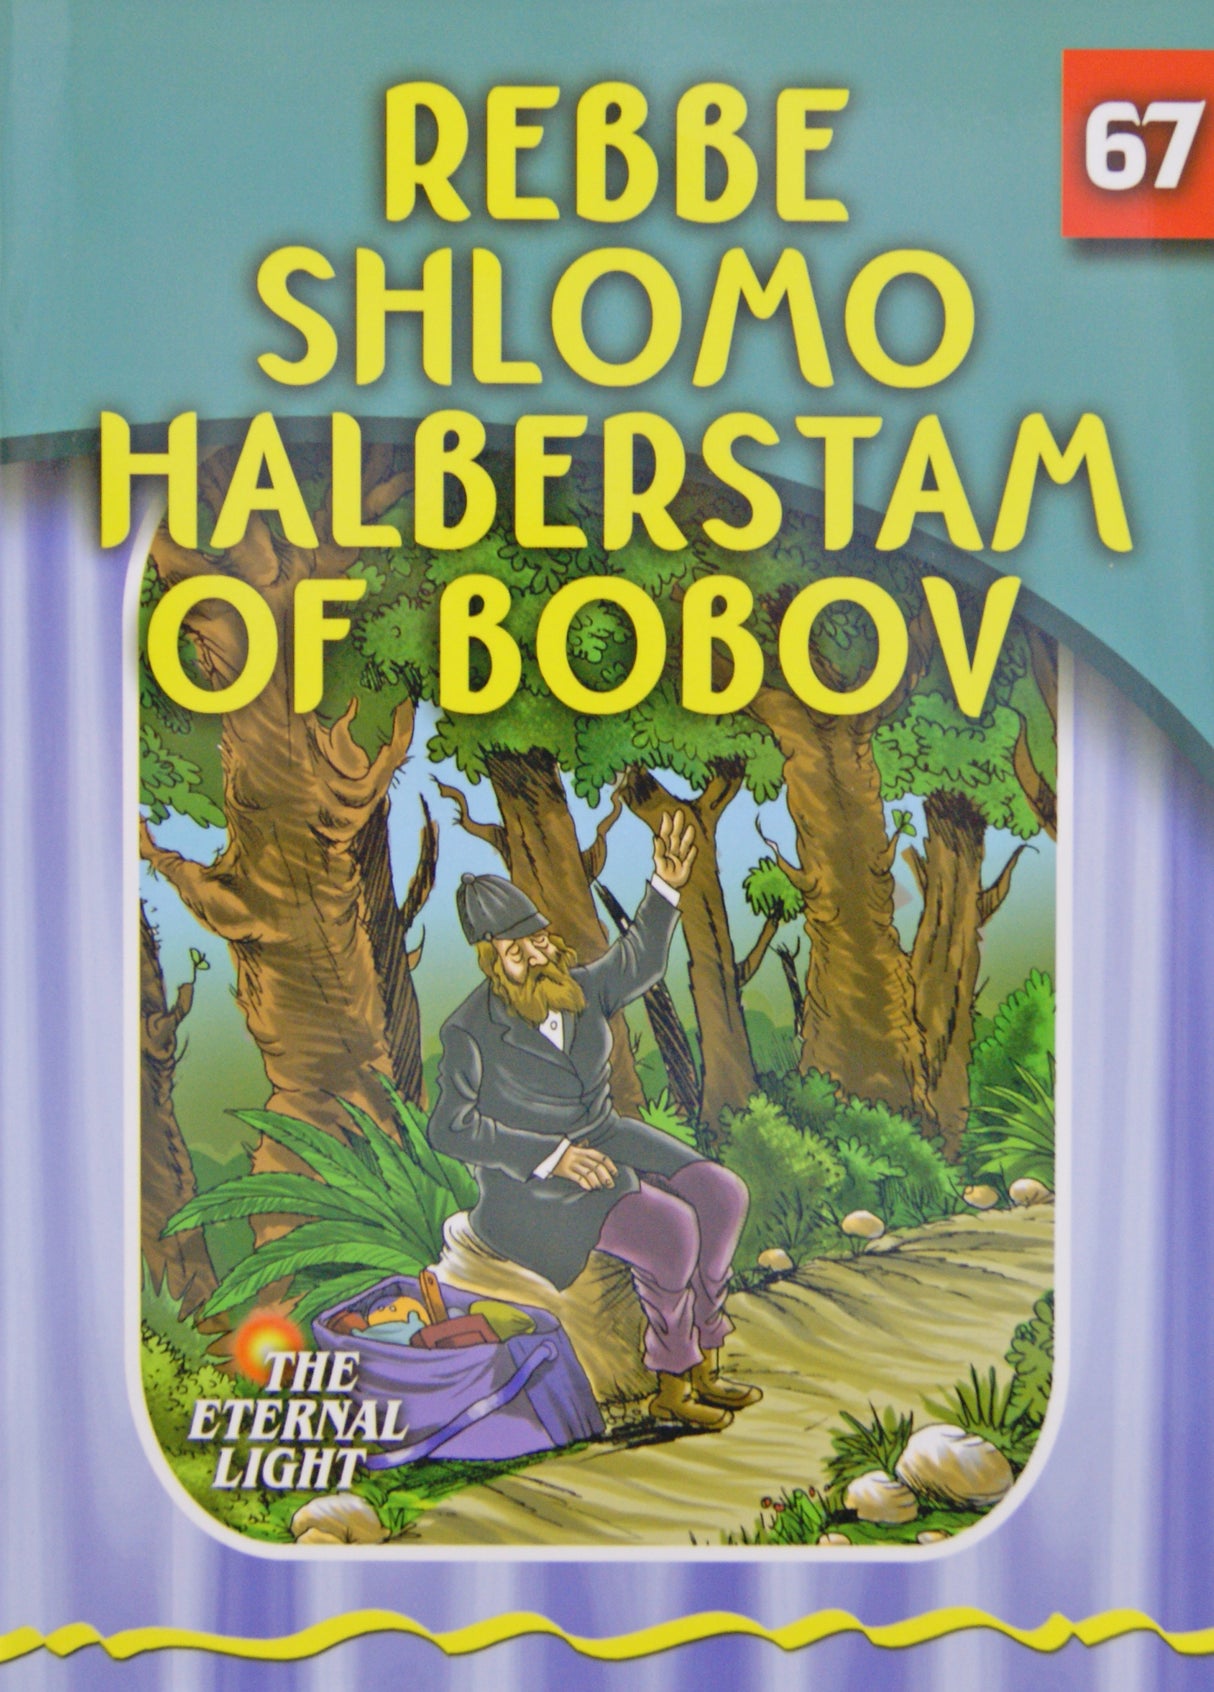 Rebbe Shlomo Halberstam of Bobov (Eternal Light Series 67)